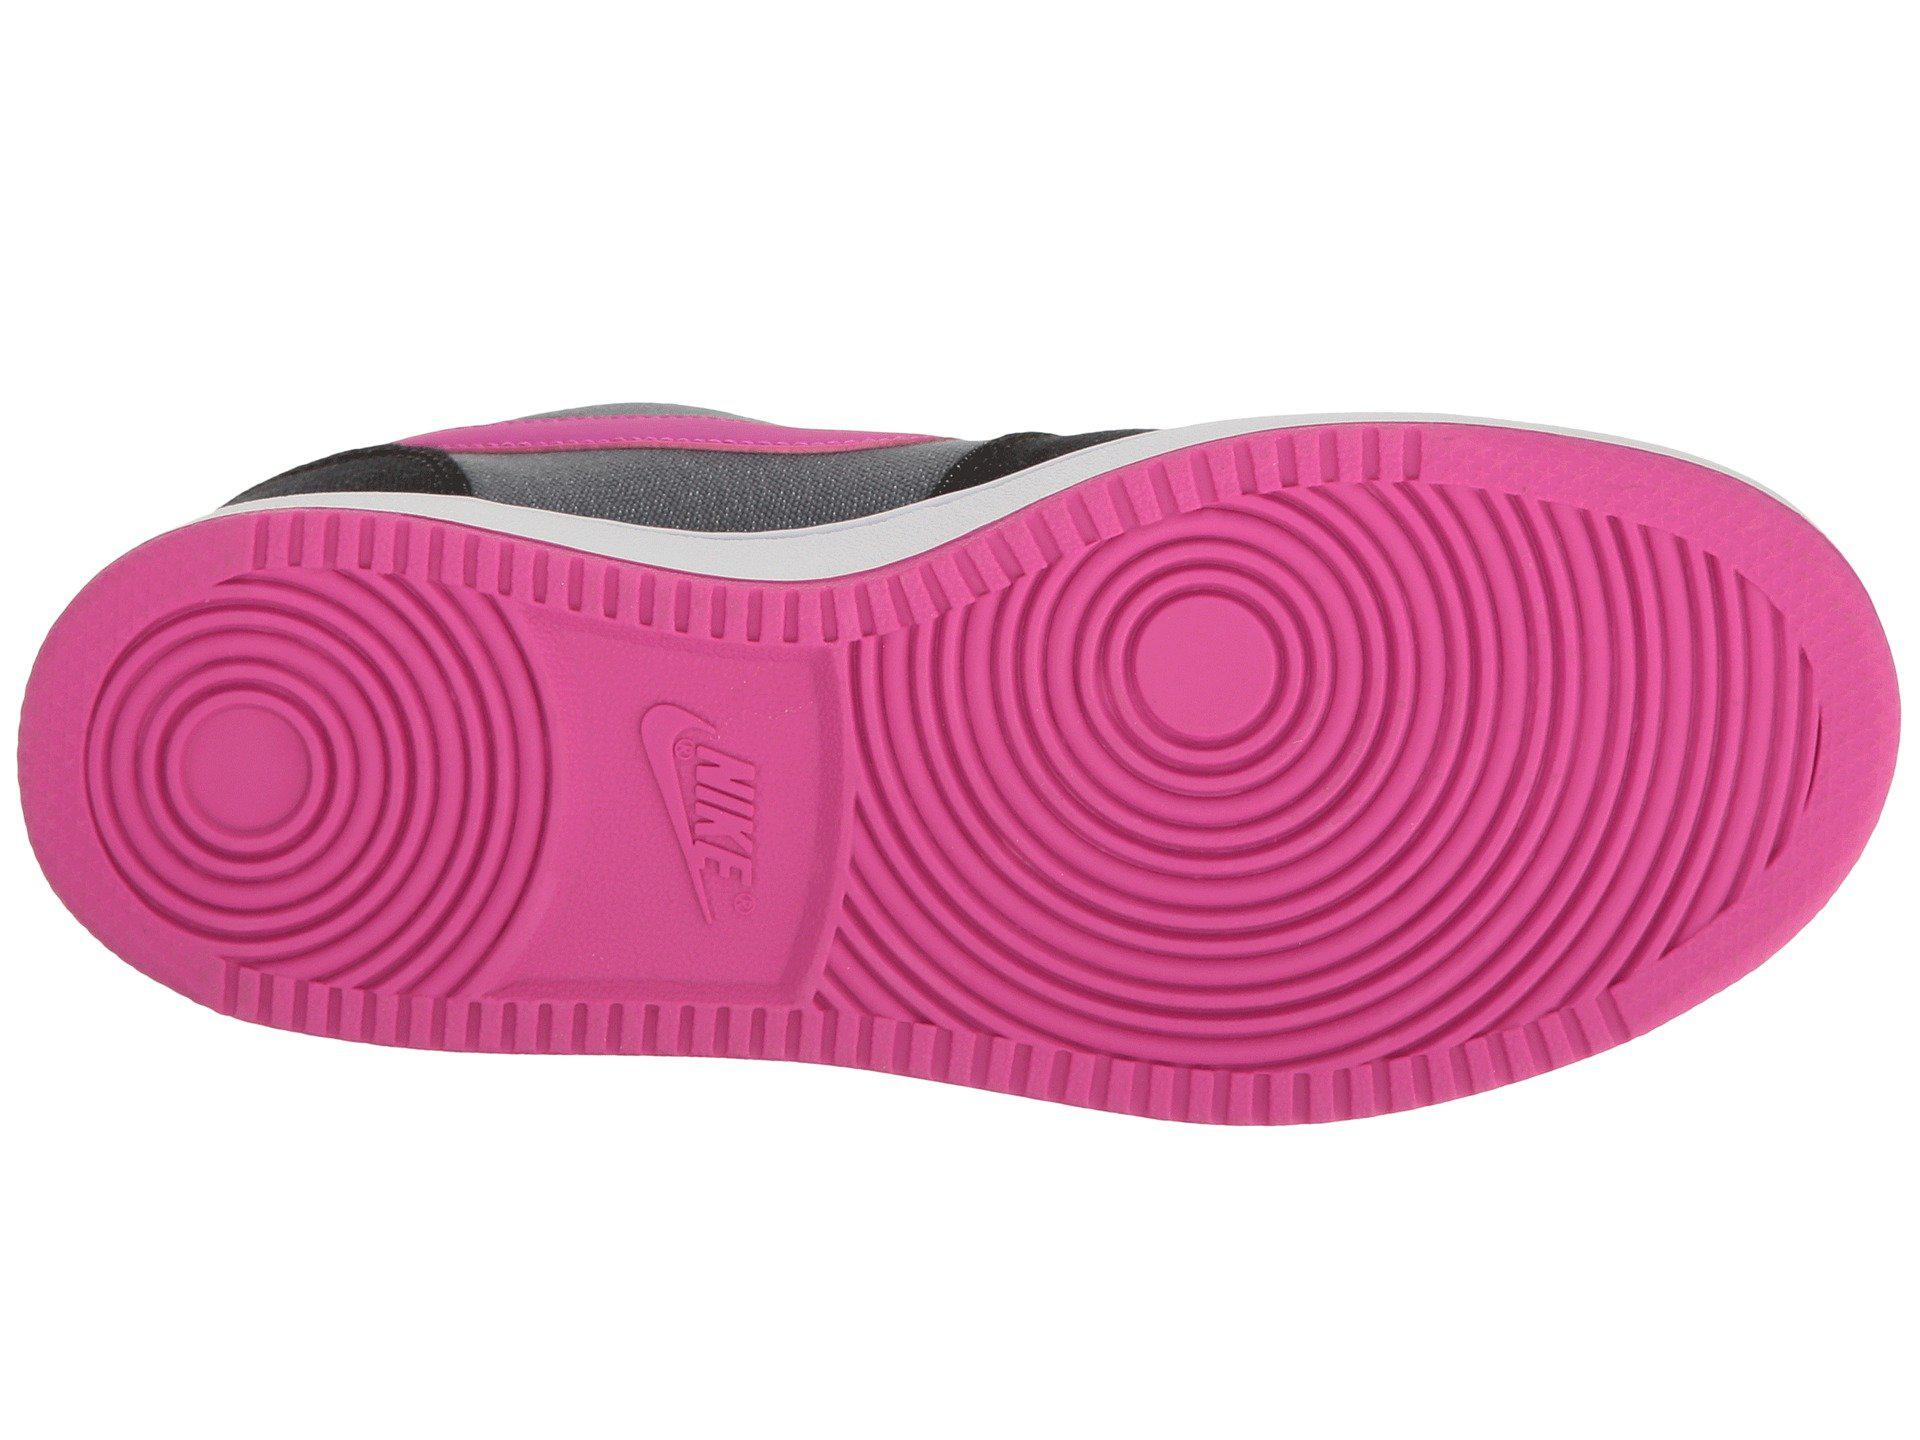 Nike Court Borough Low Premium in Pink | Lyst